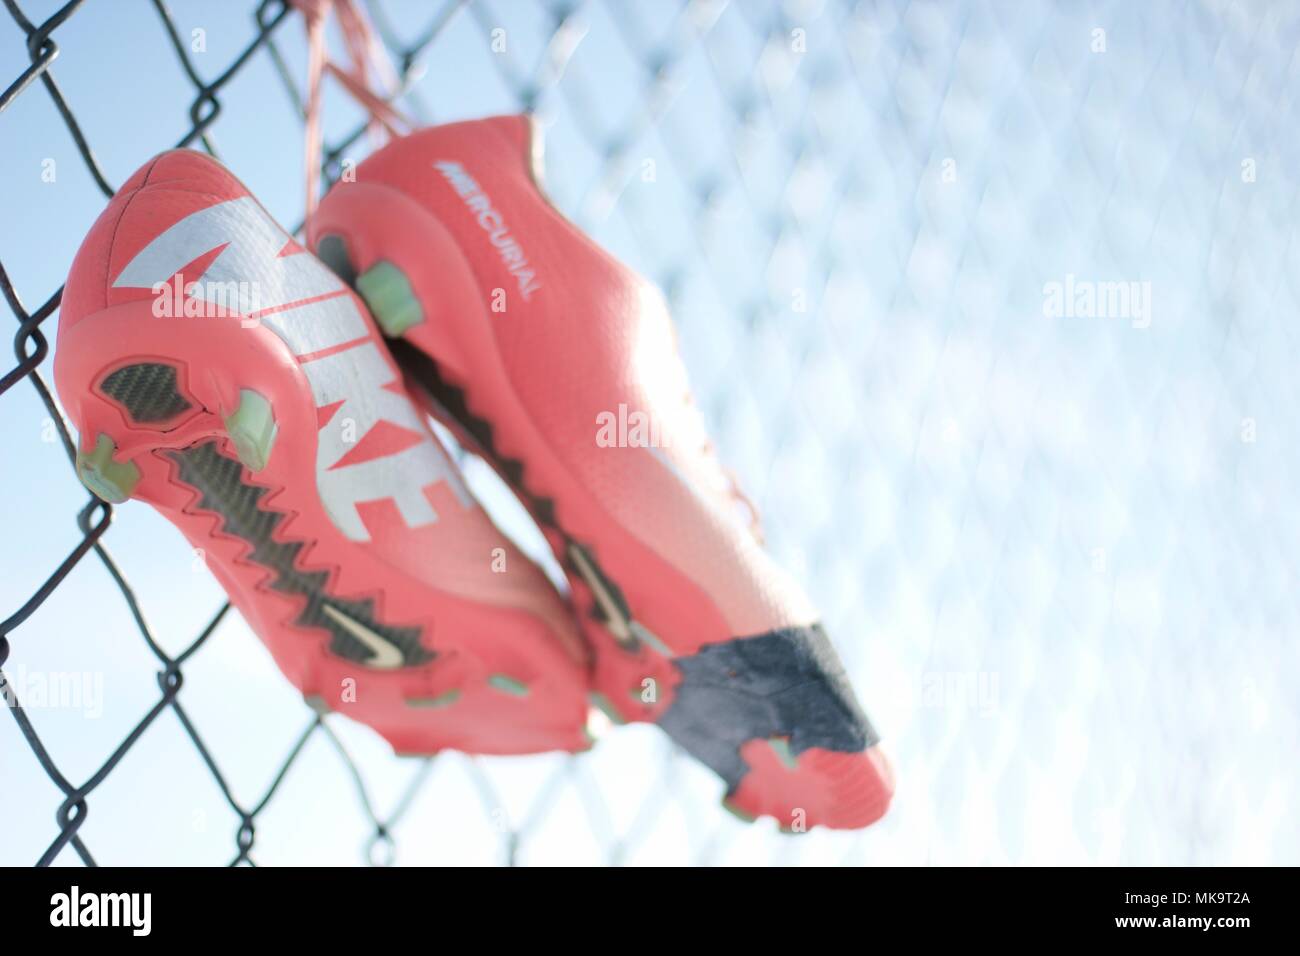 Soccer tacos fotografías e imágenes de alta resolución - Alamy